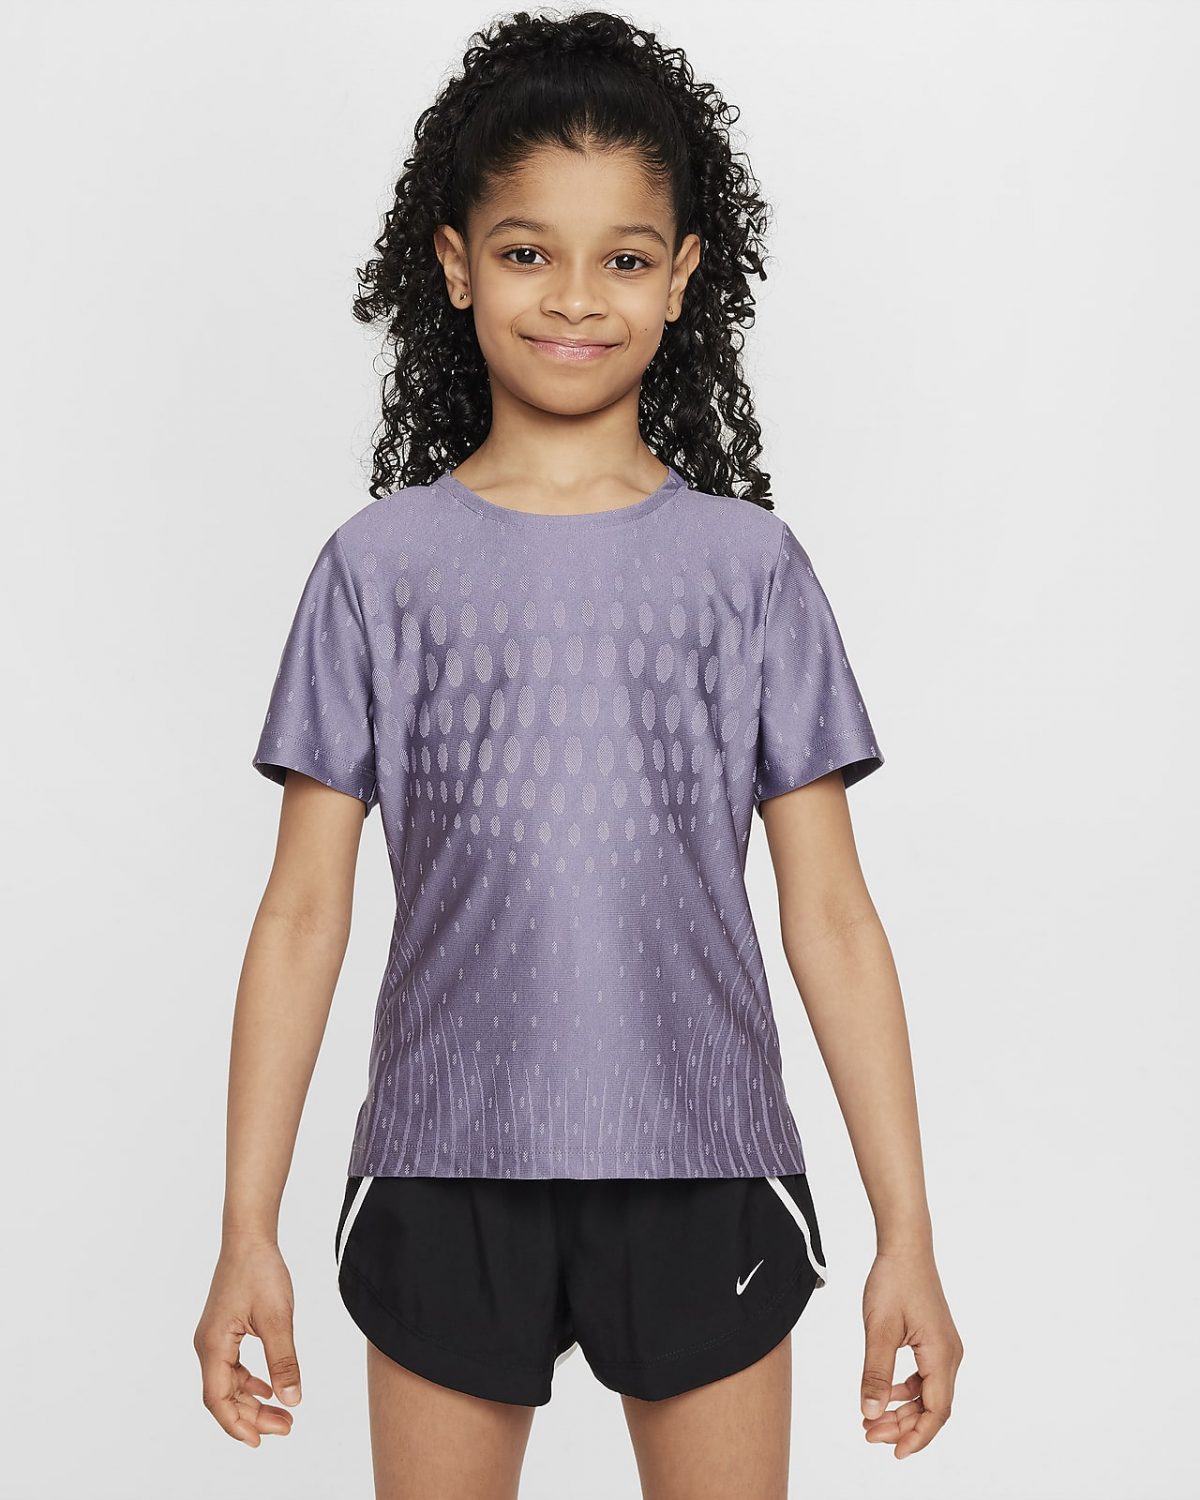 Детская рубашка Nike фото